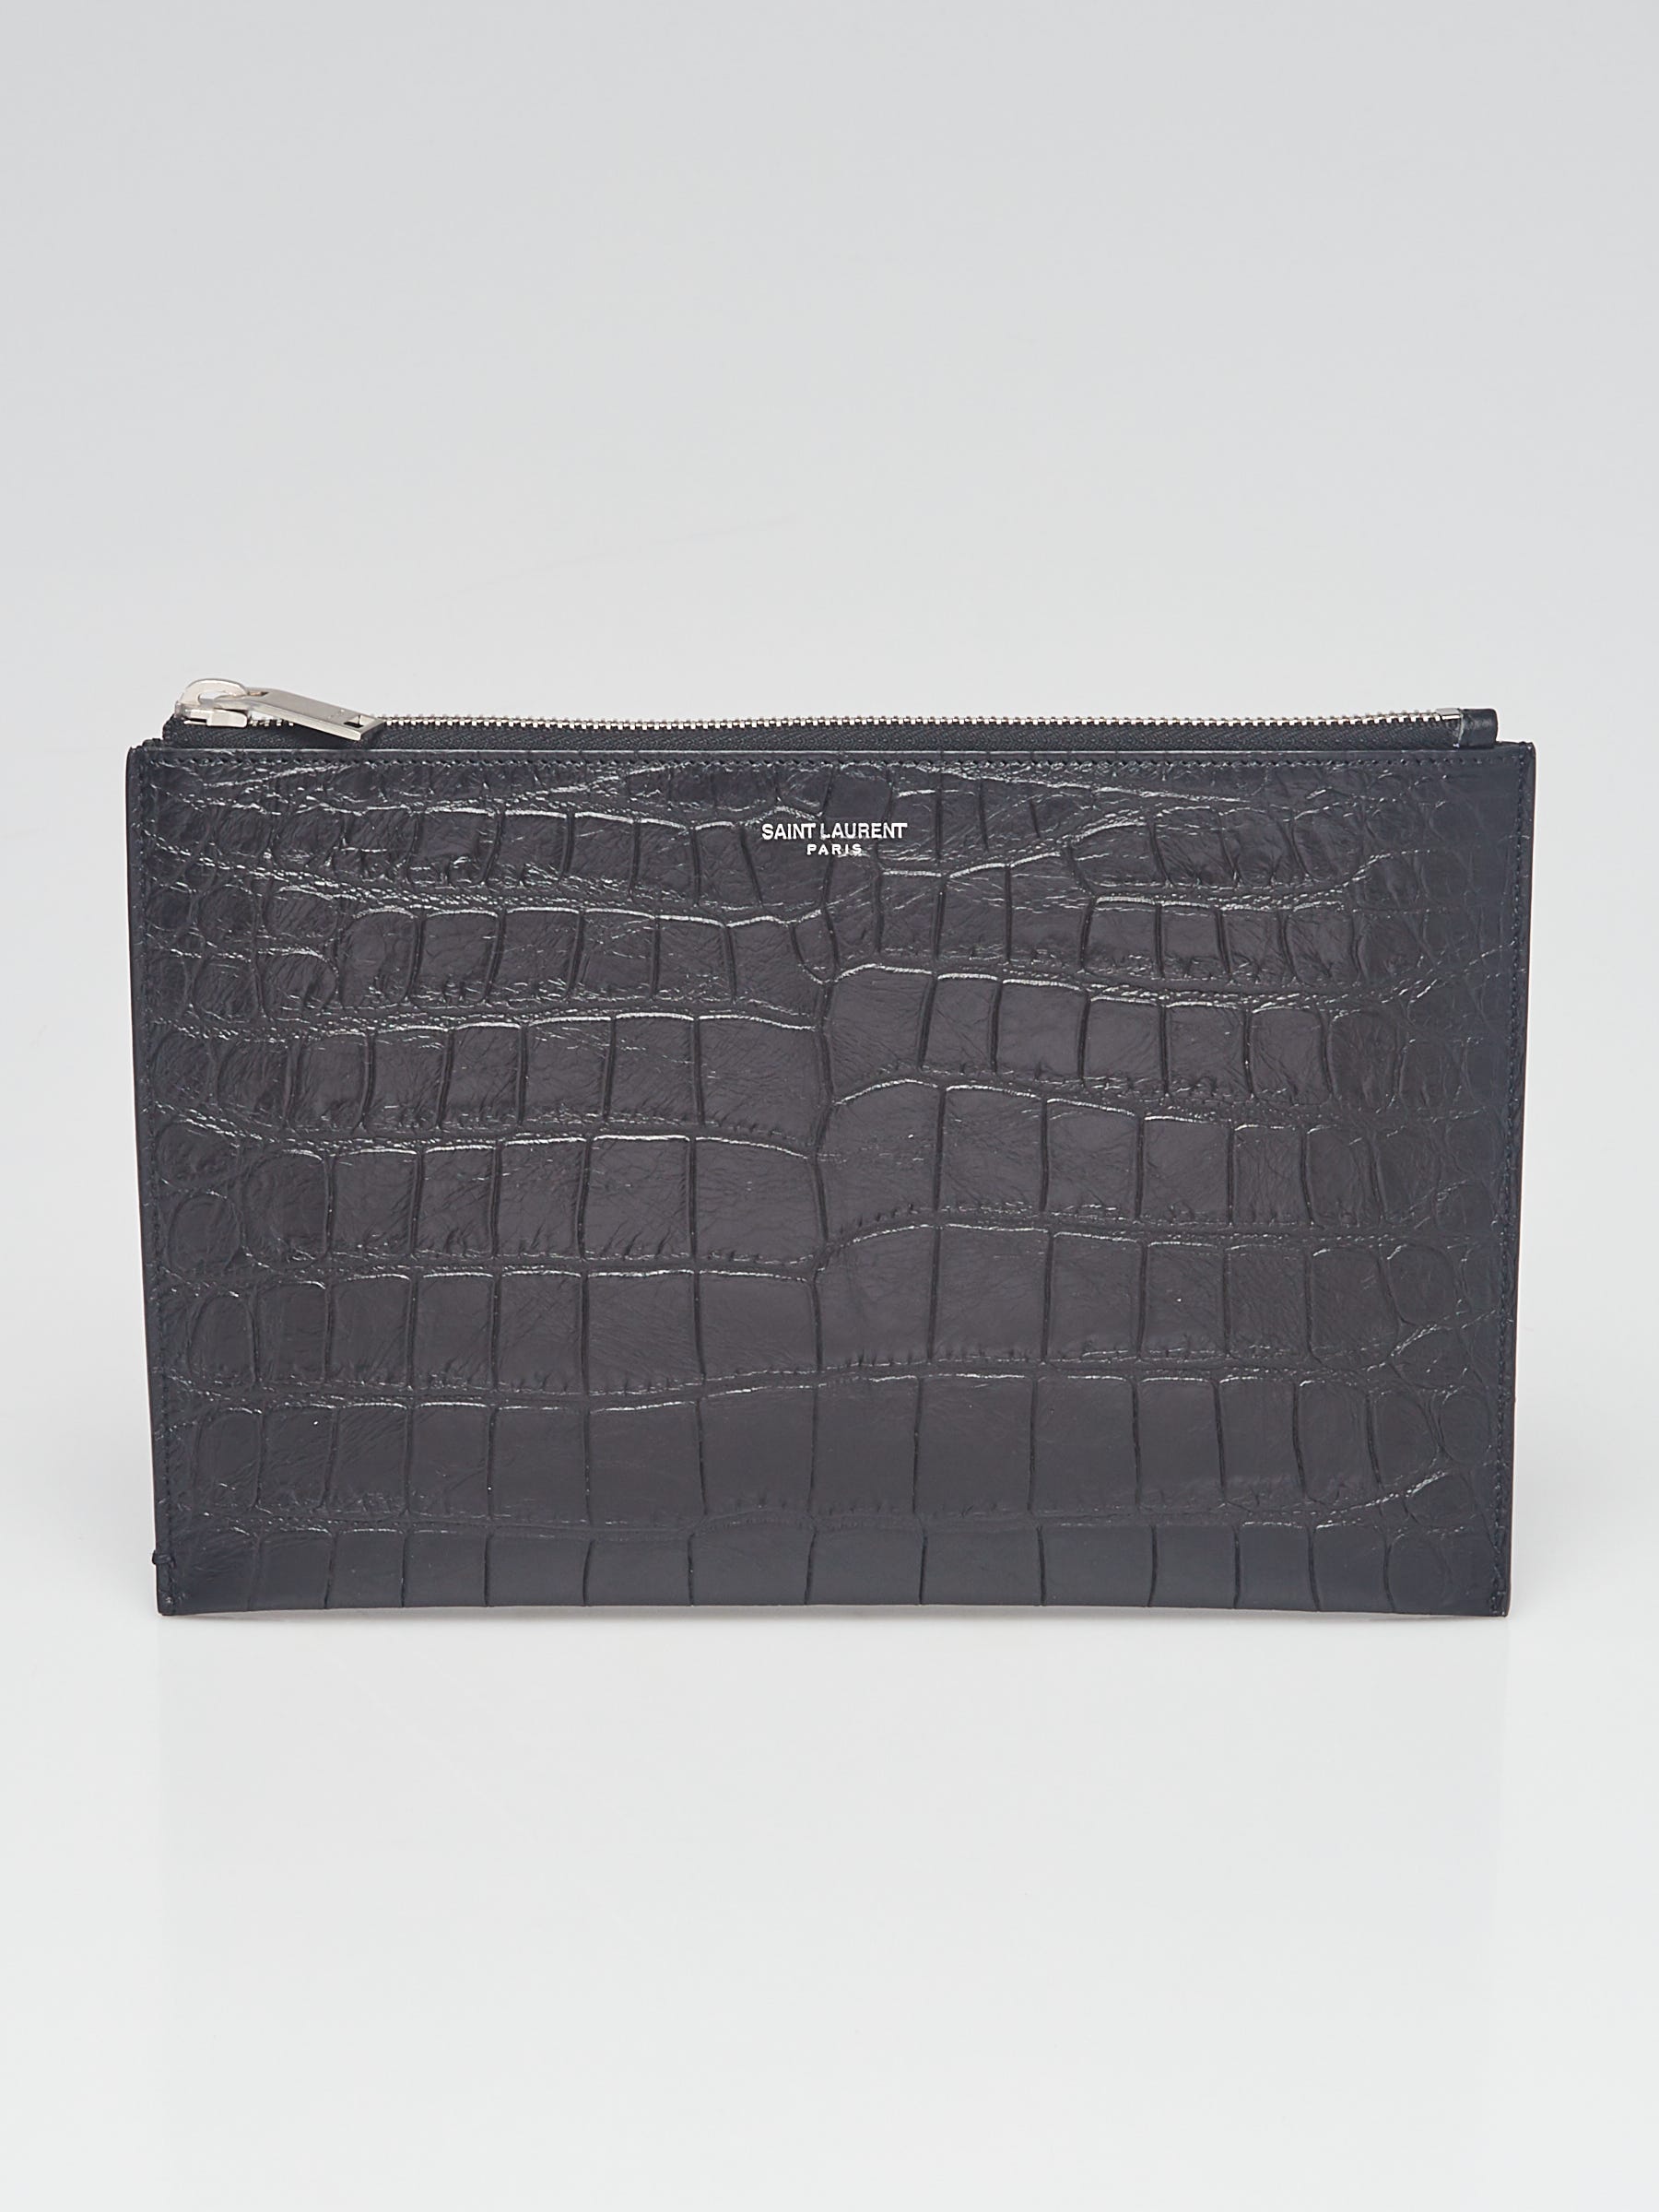 Yves Saint Laurent Black Croc Embossed Leather Zipped Mini Tablet